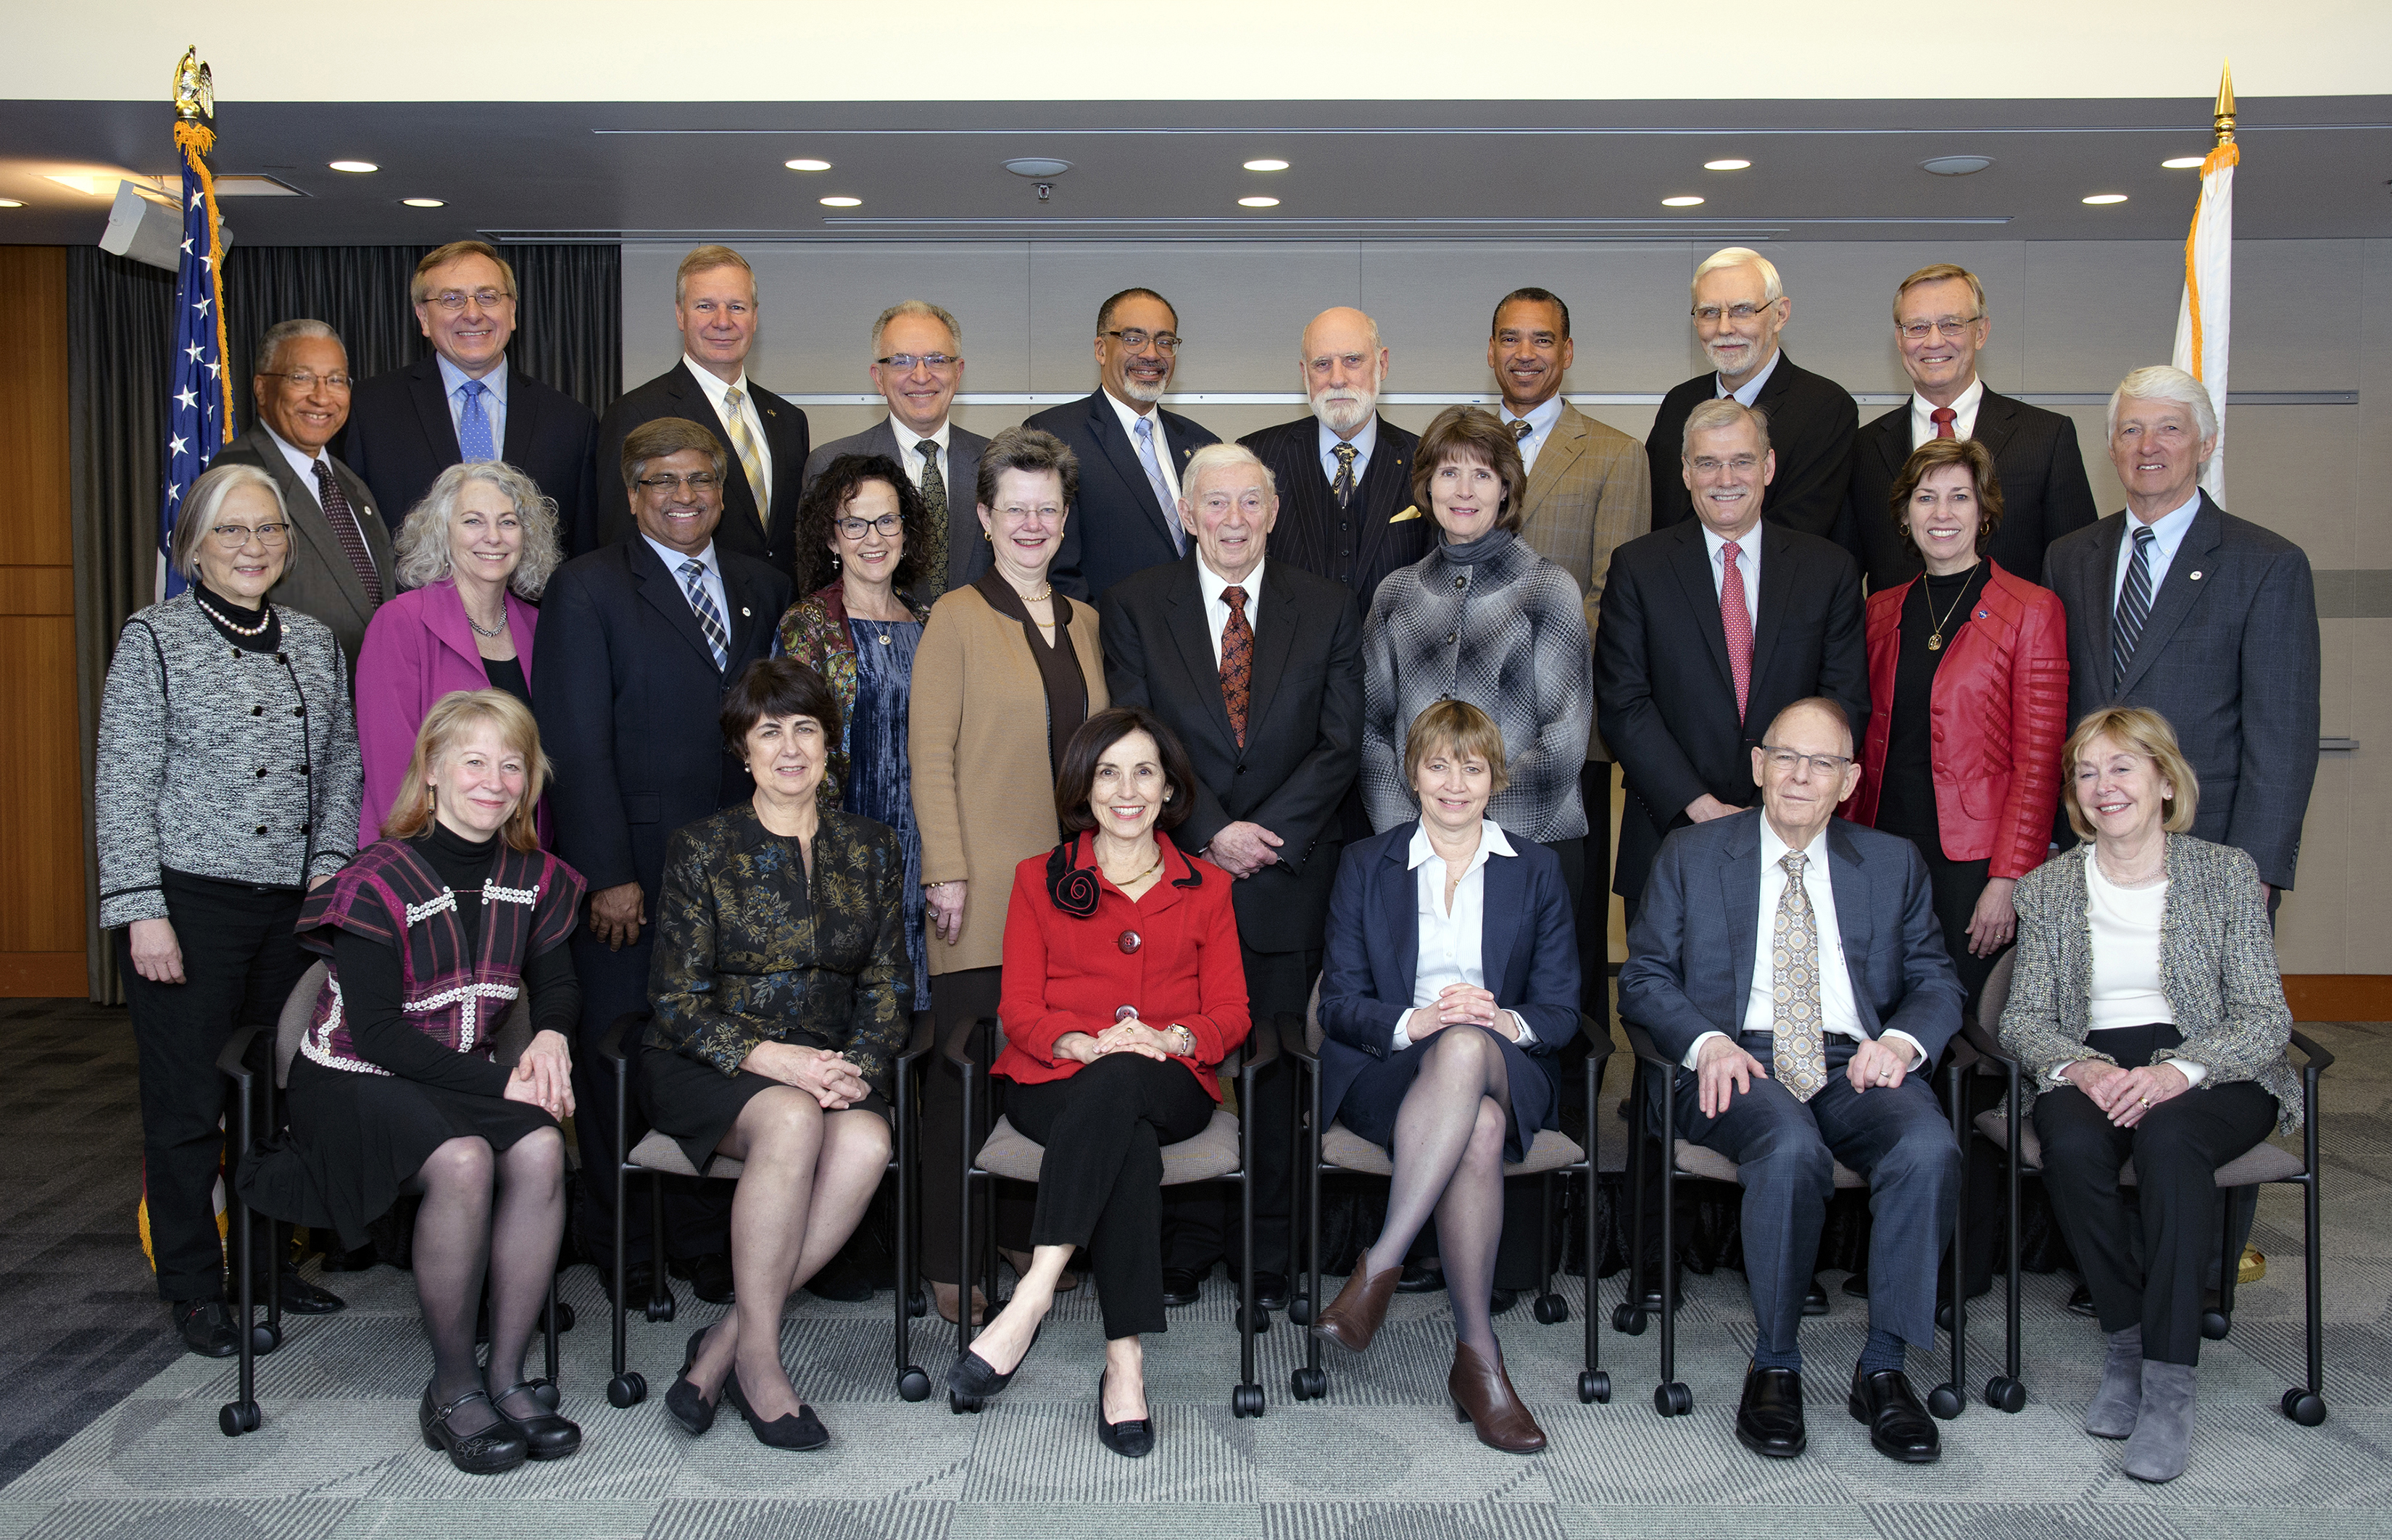 Board Meeting Group Photo